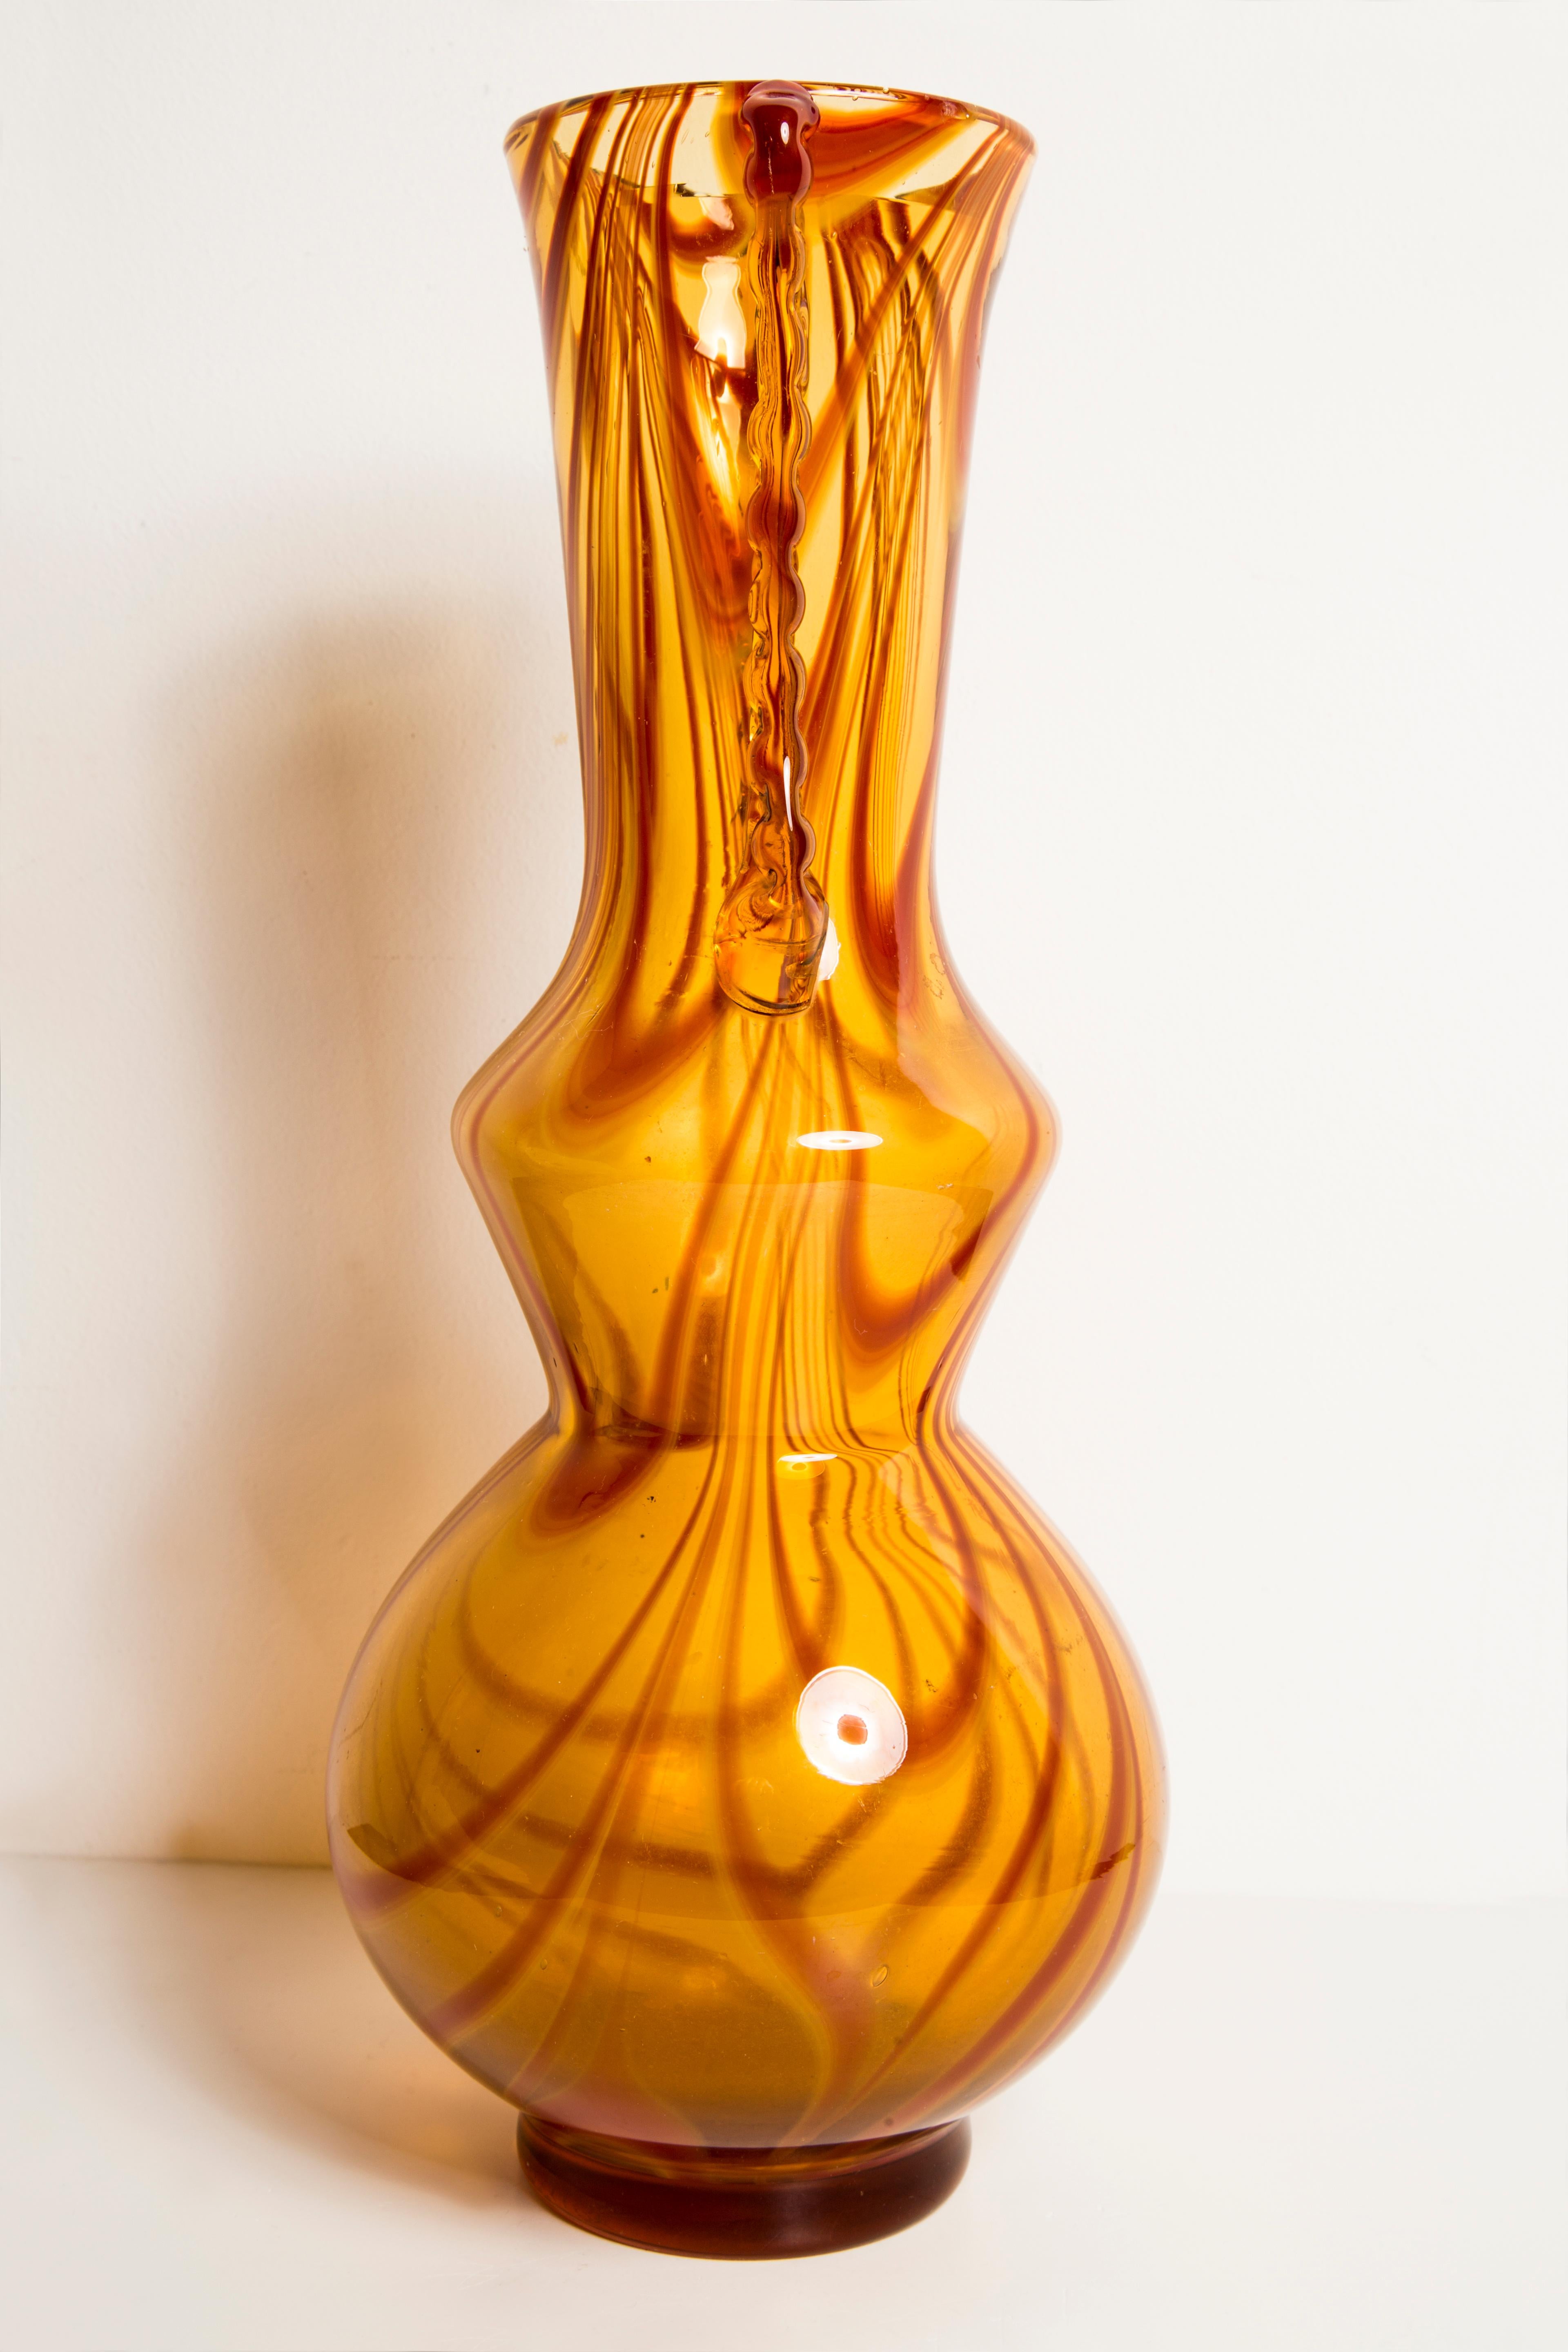 Midcentury Vintage Yellow and Orange Vase, Europe, 1960s For Sale 2